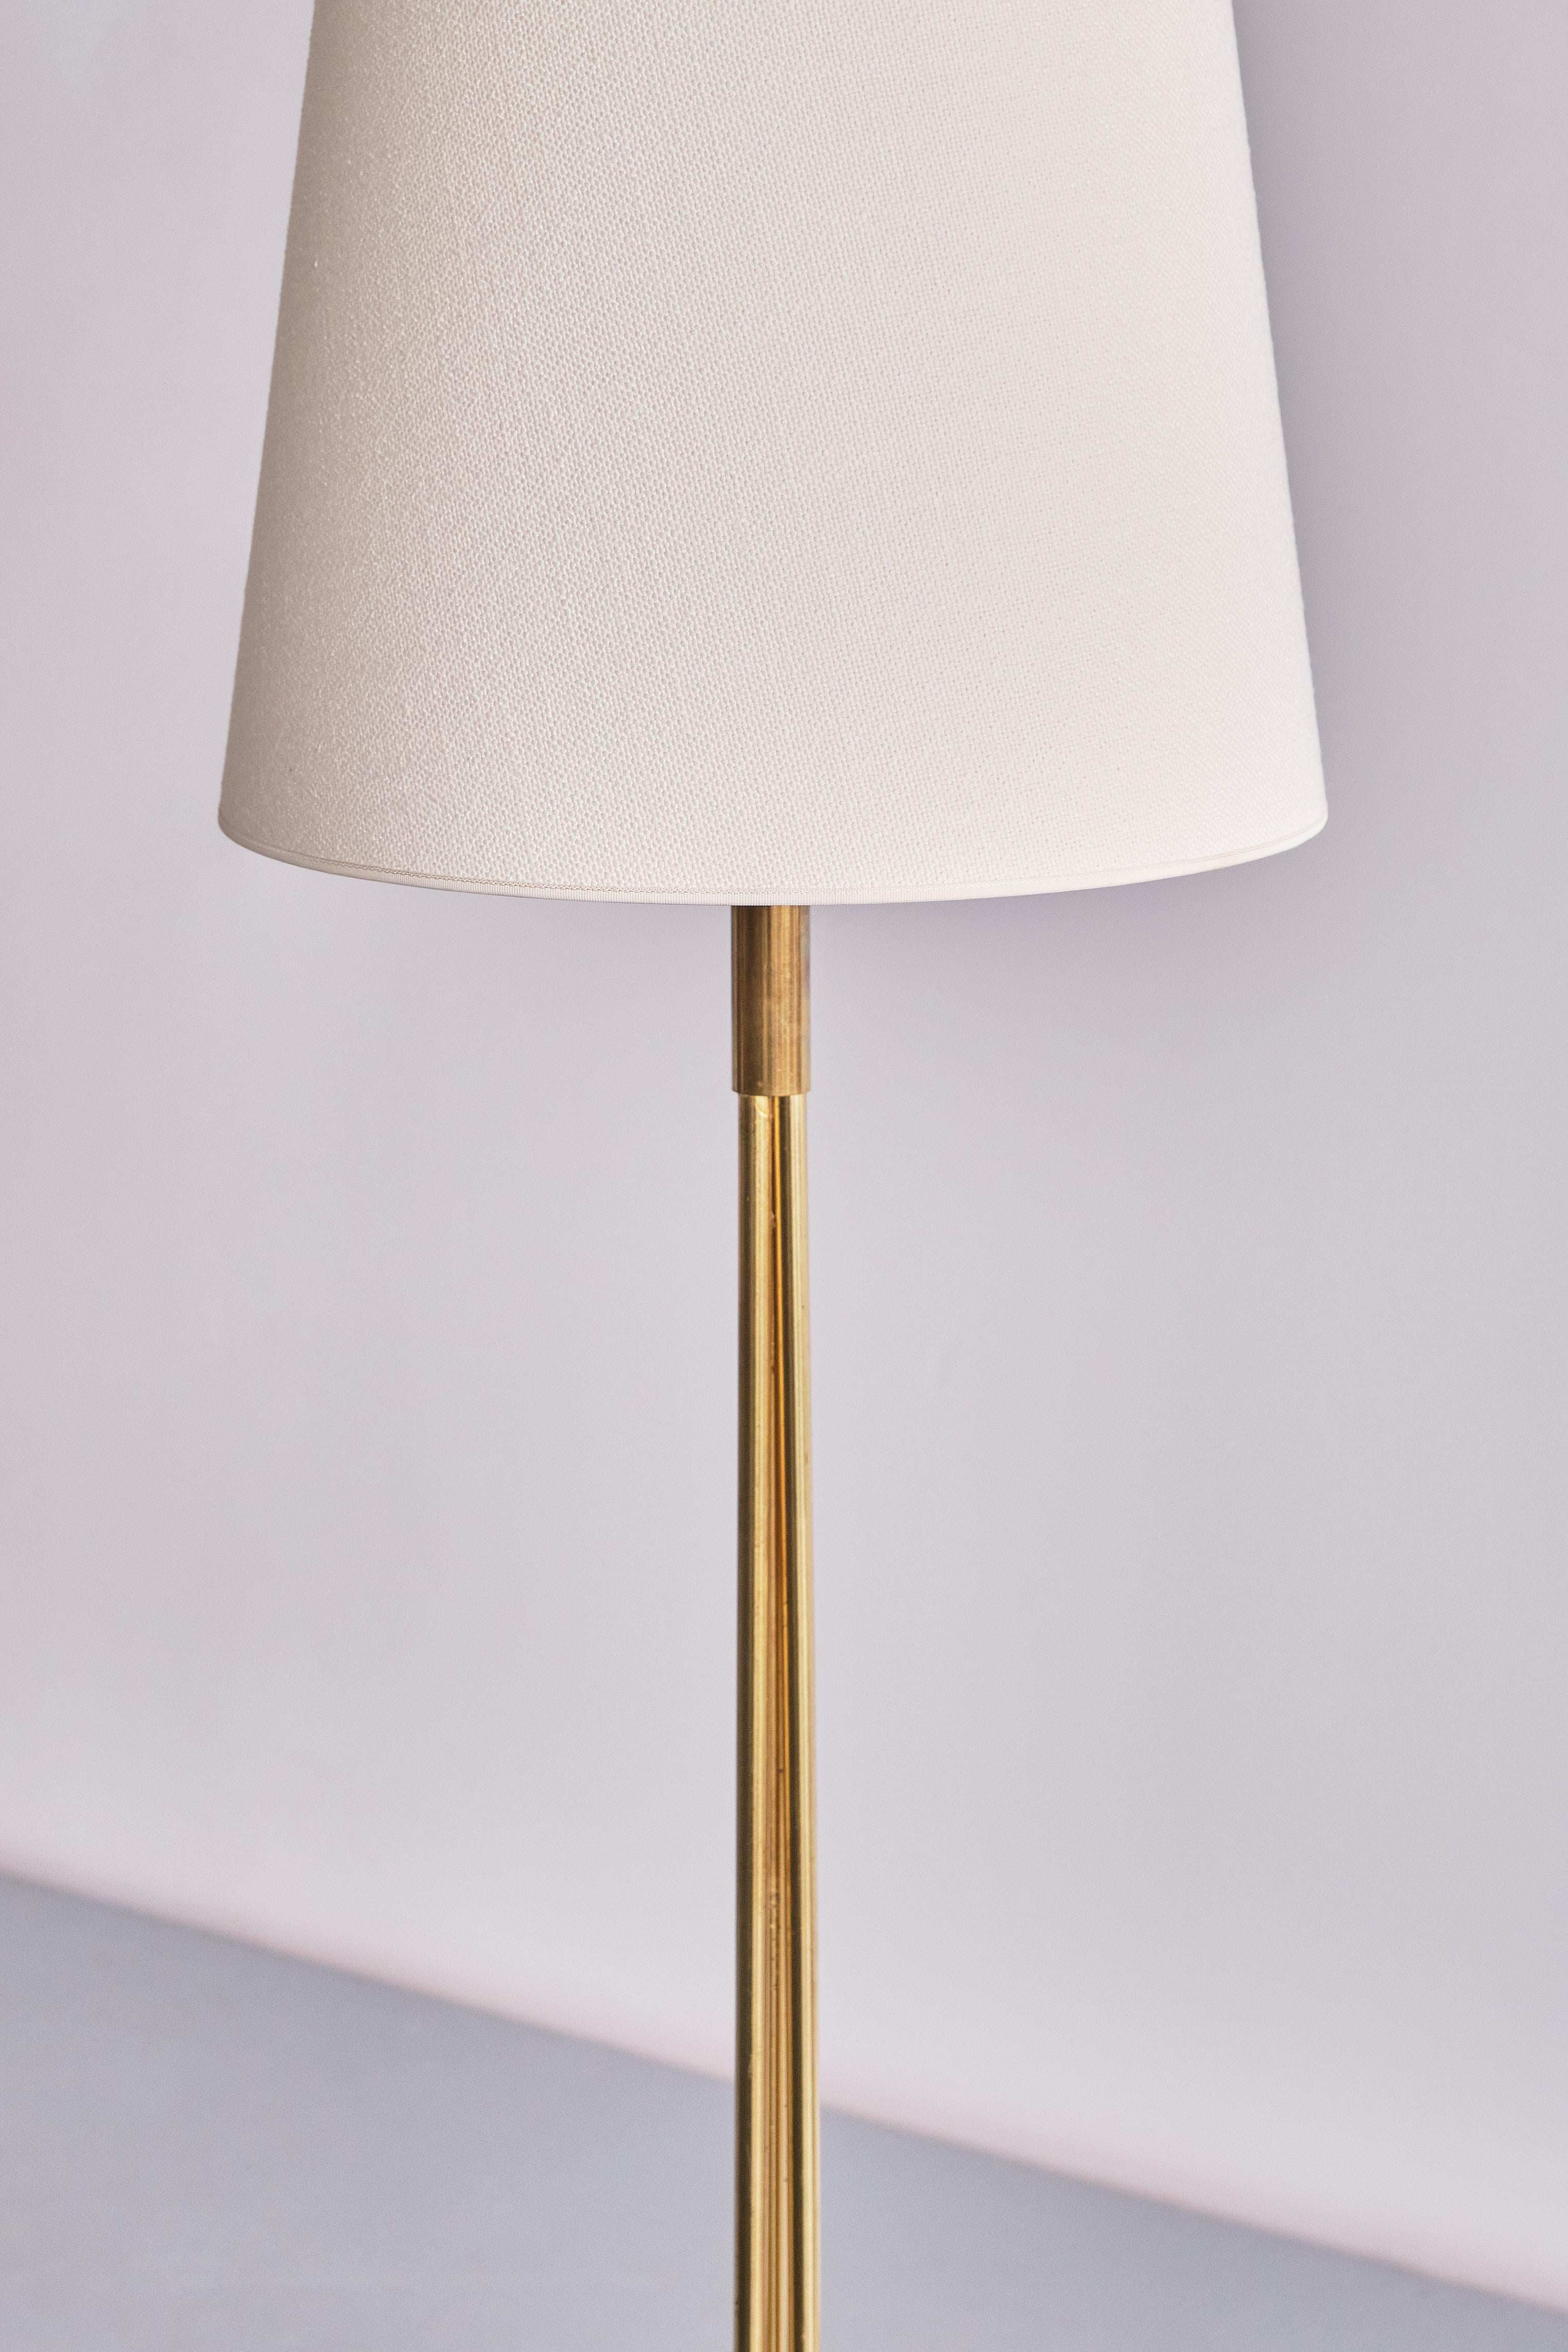 Scandinavian Modern Swedish Modern Three Legged Floor Lamp in Brass, Sweden, 1950s